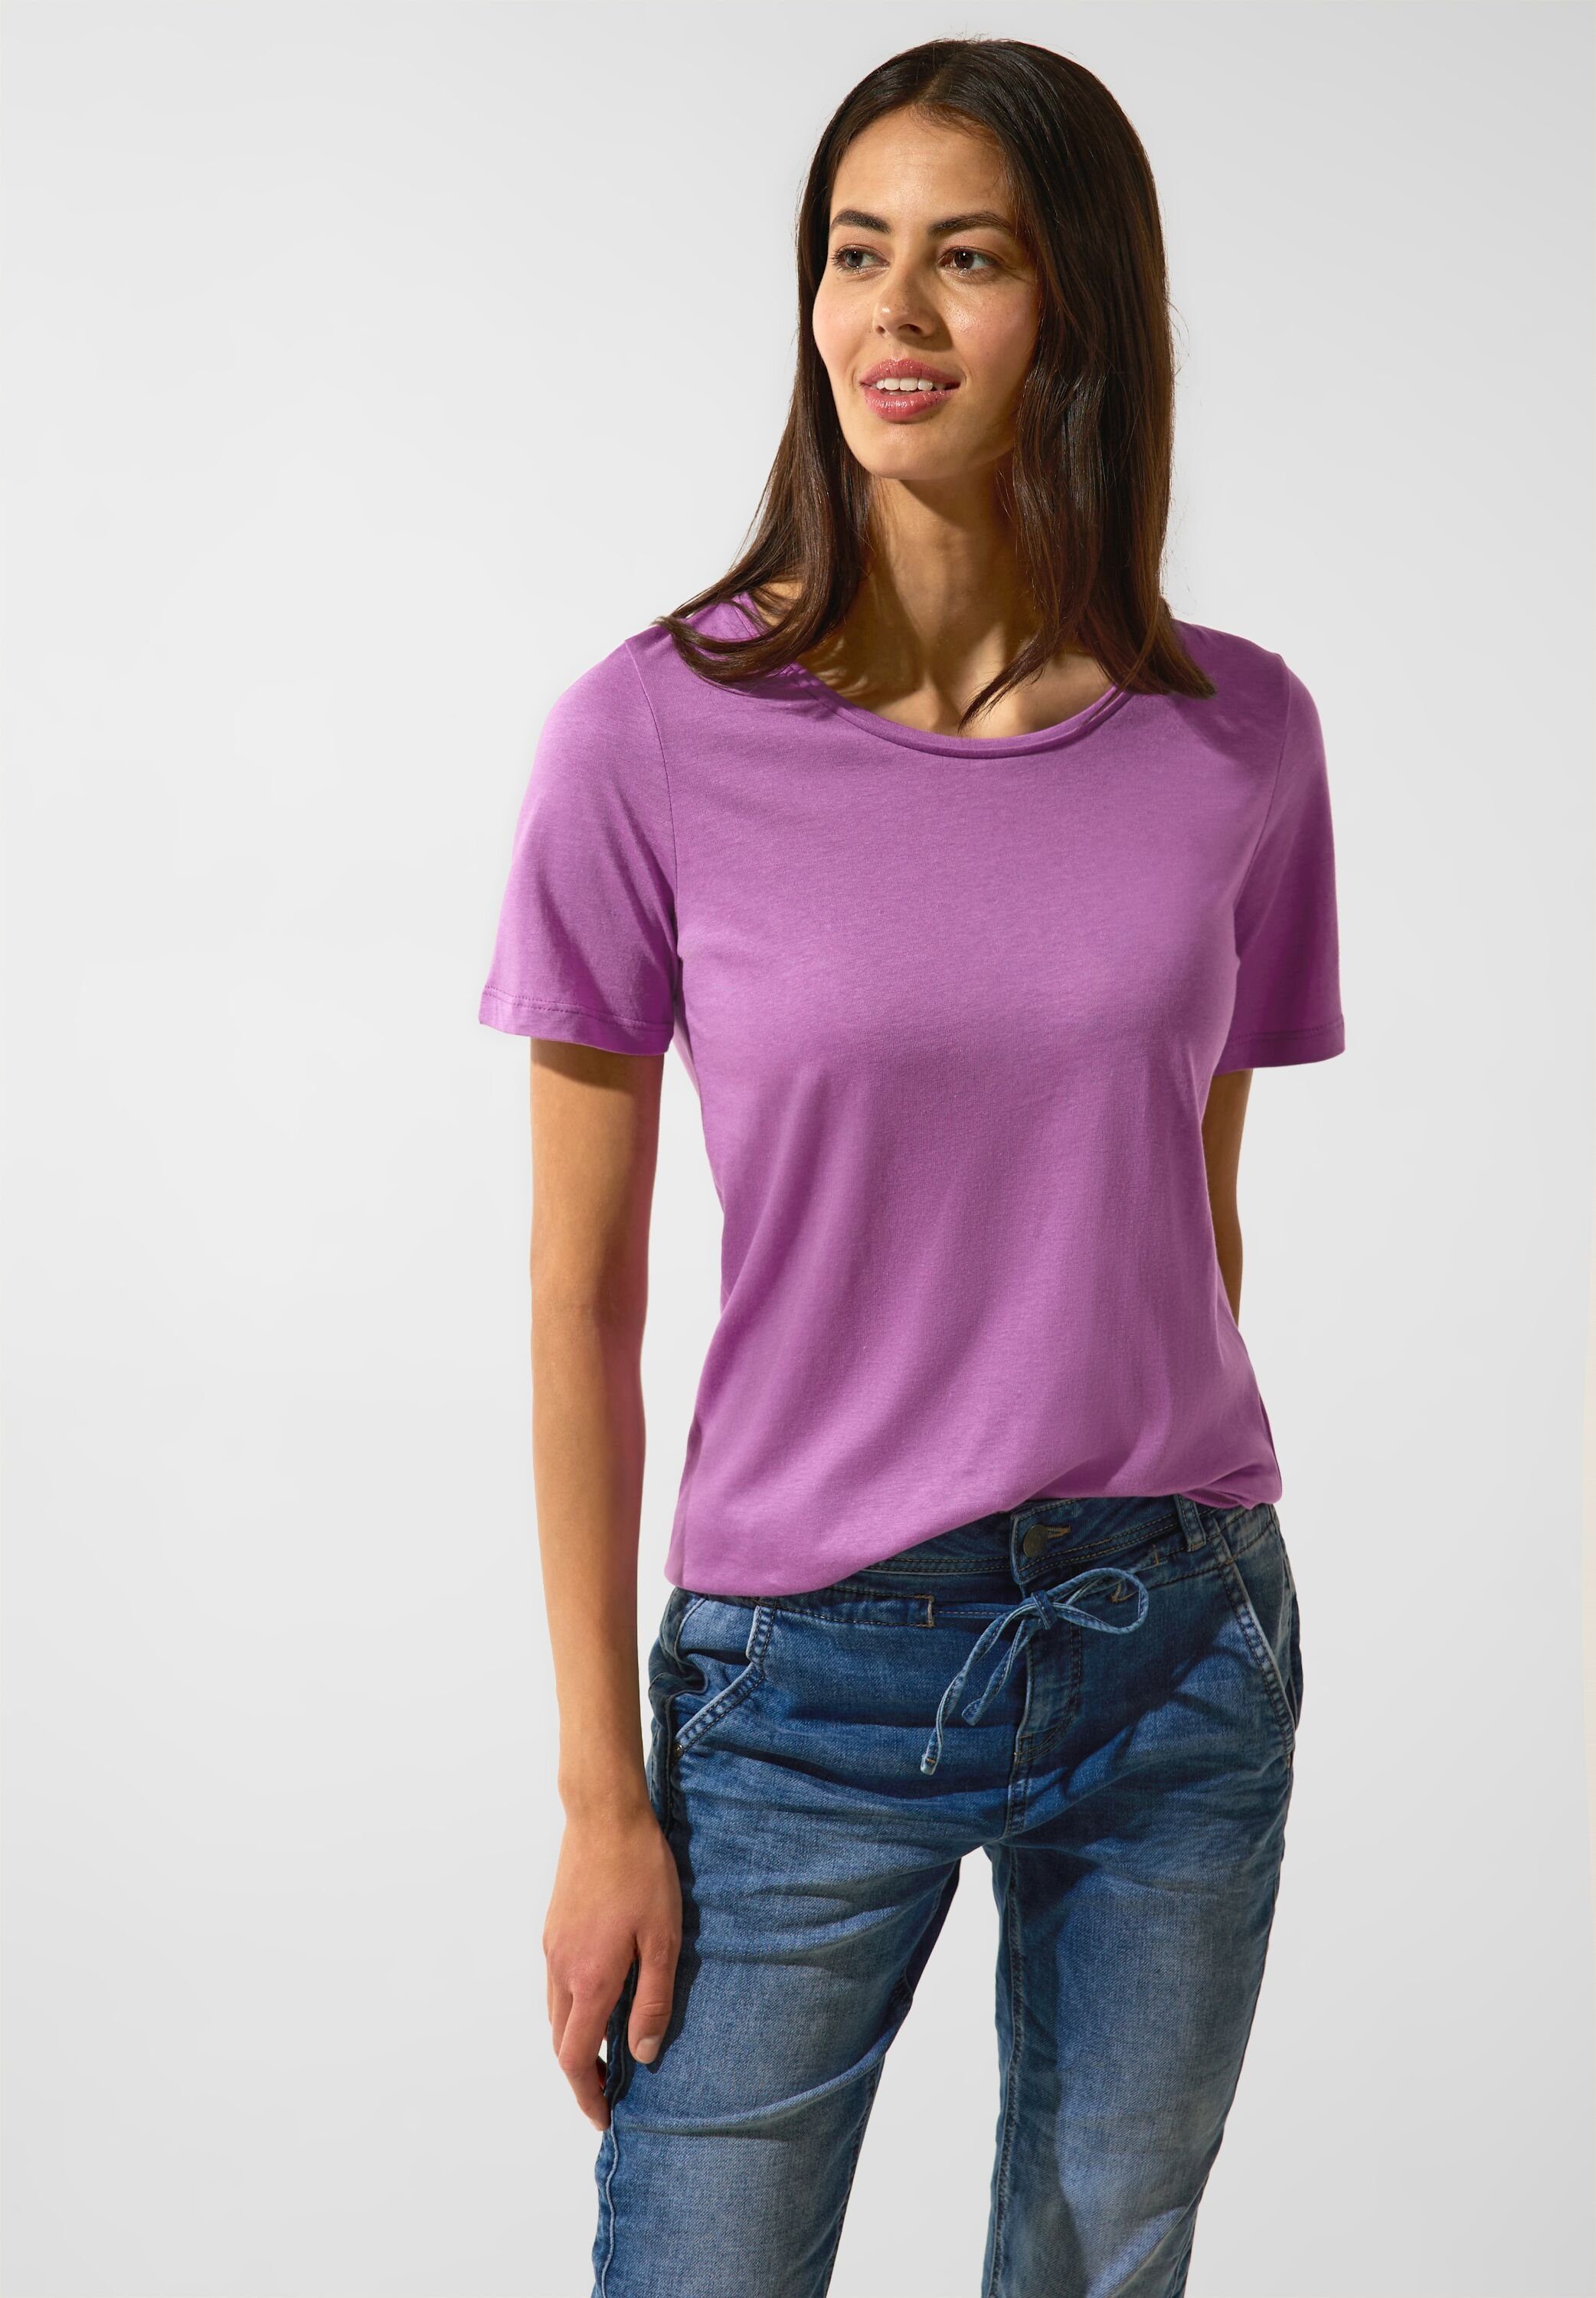 ONE STREET Unifarbe meta in lilac T-Shirt